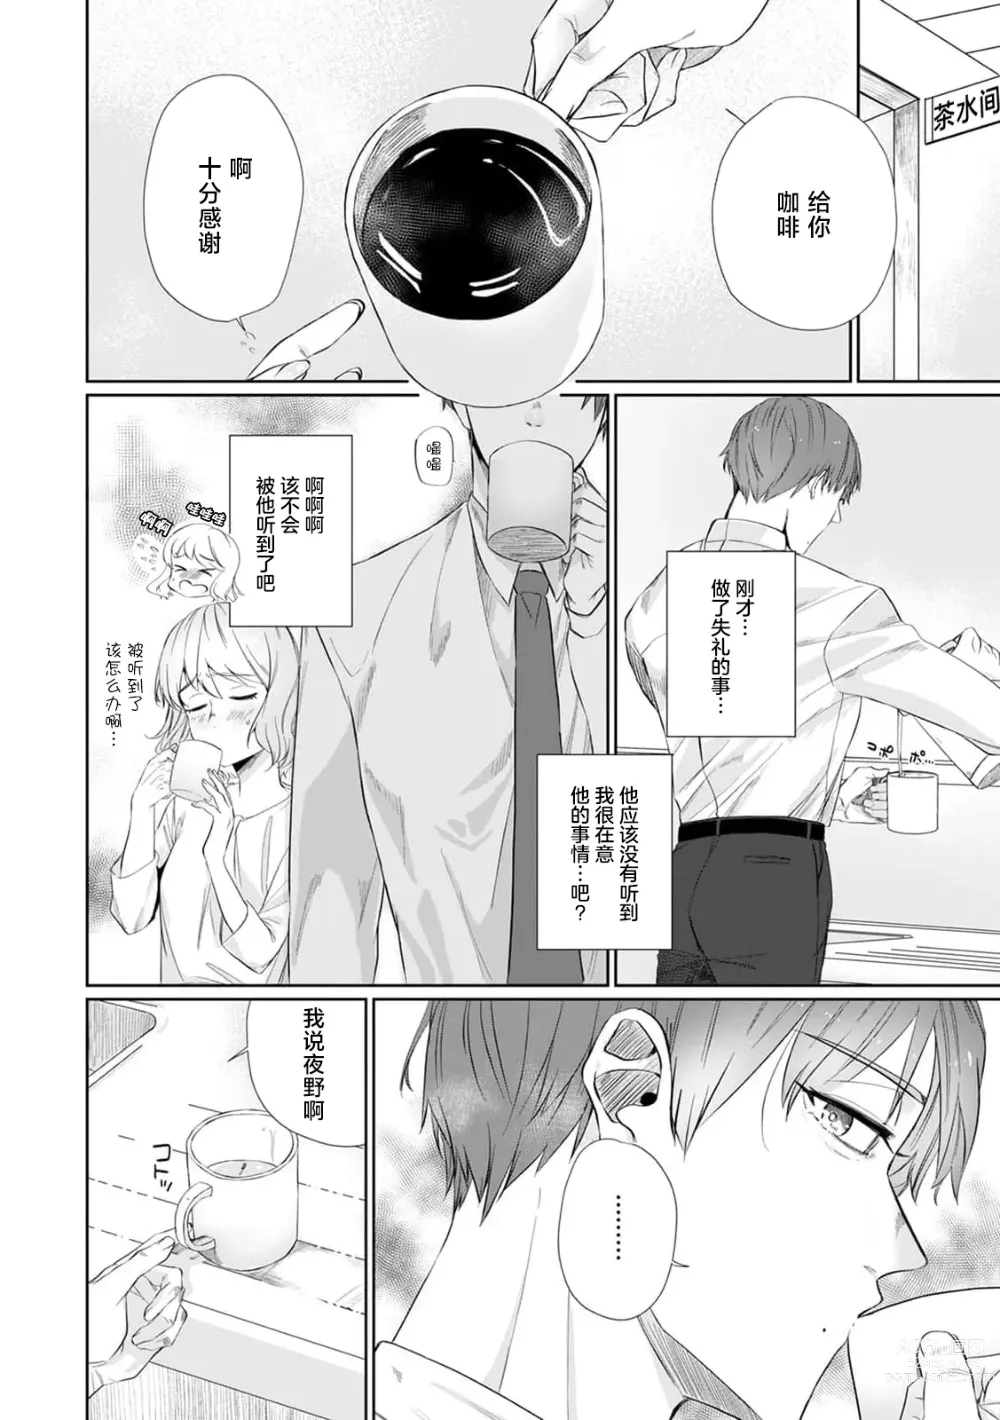 Page 6 of manga 二人陷入爱沼。夜里沉醉在有隐情上司的色气中 1-6